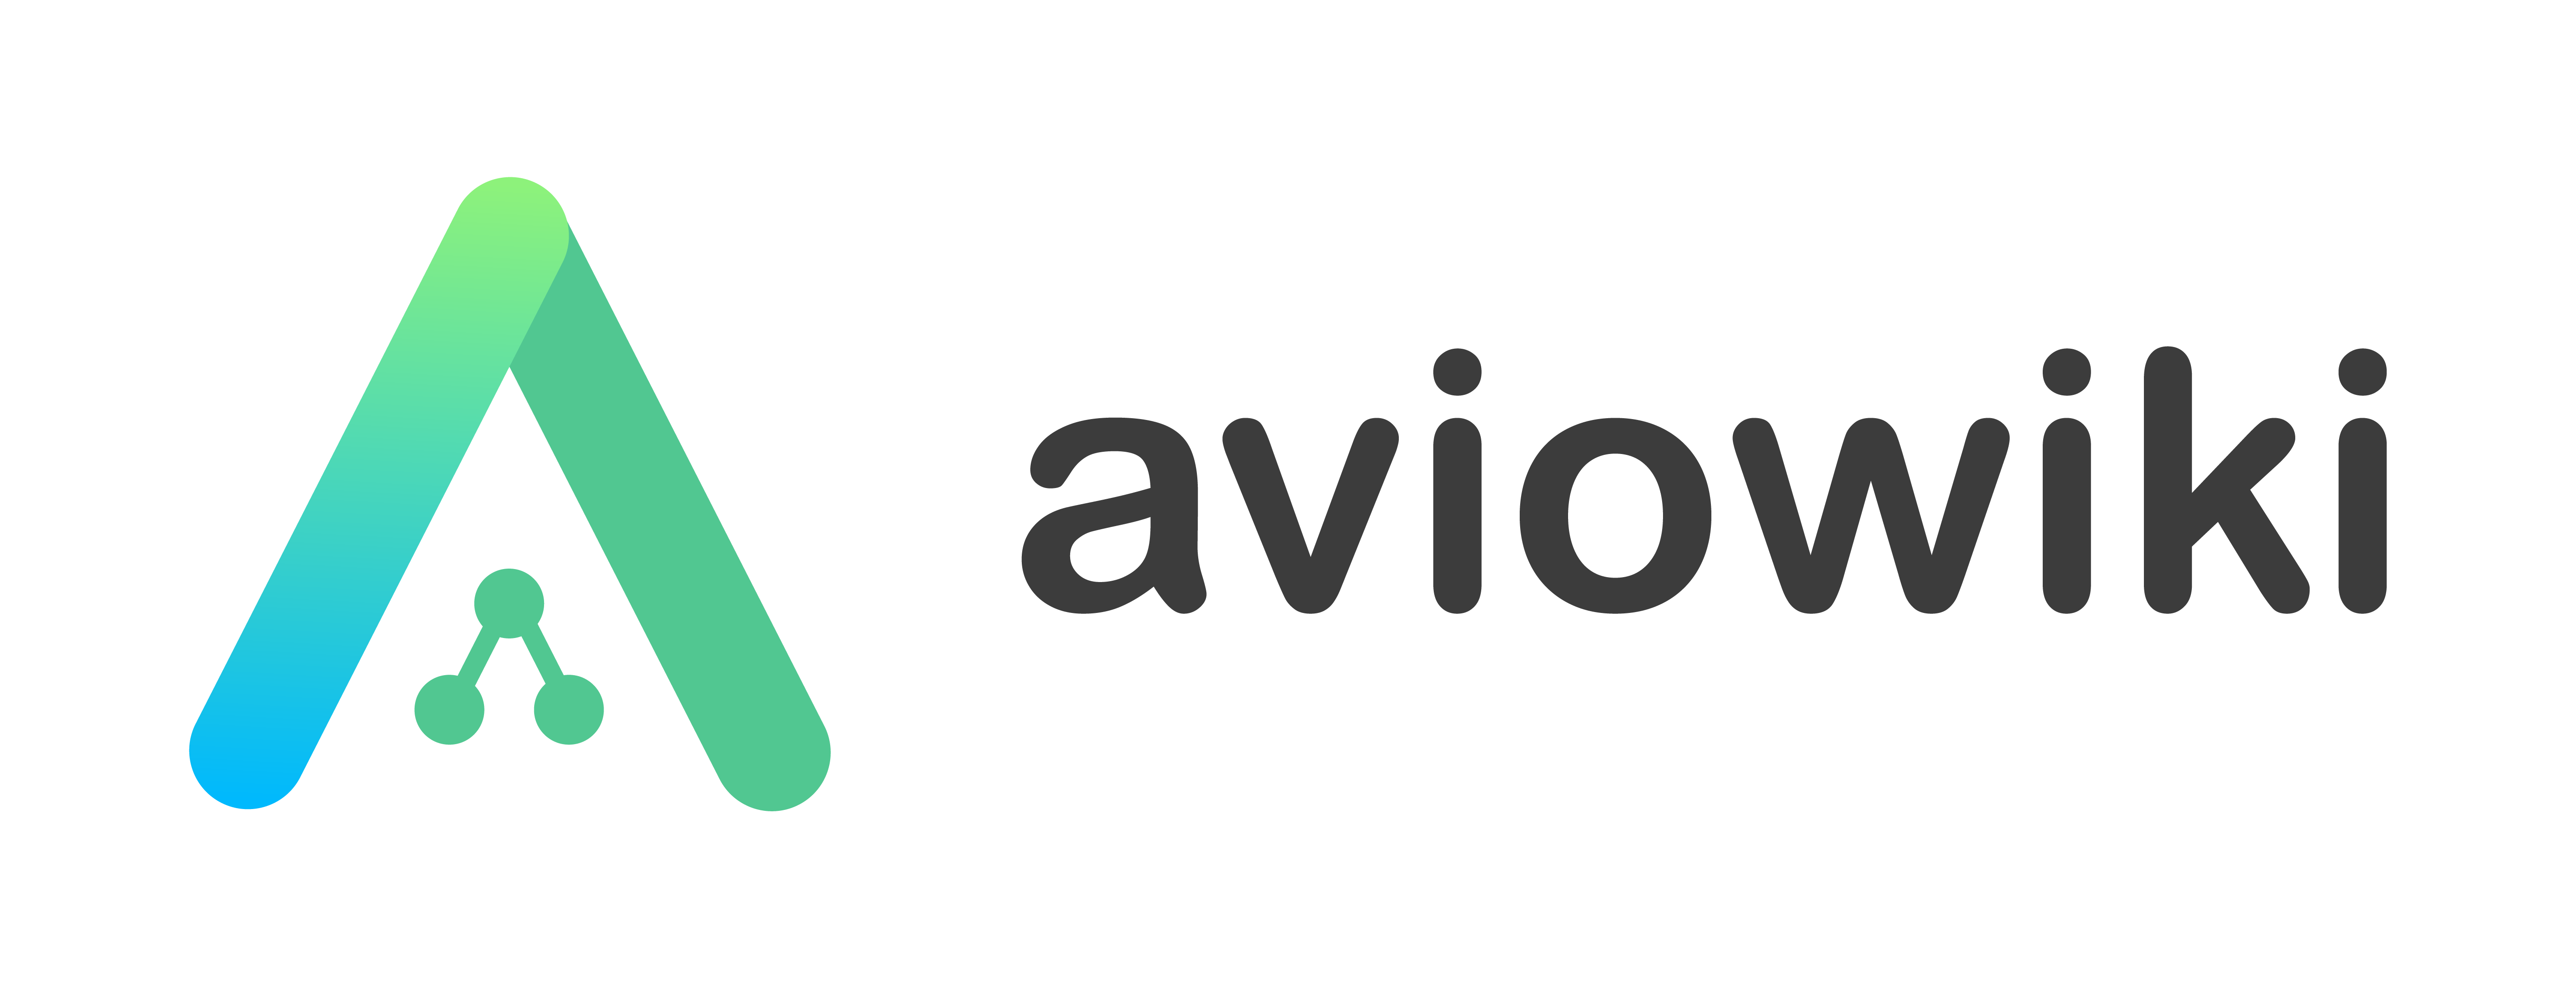 aviowiki_logo_Rosterize partner